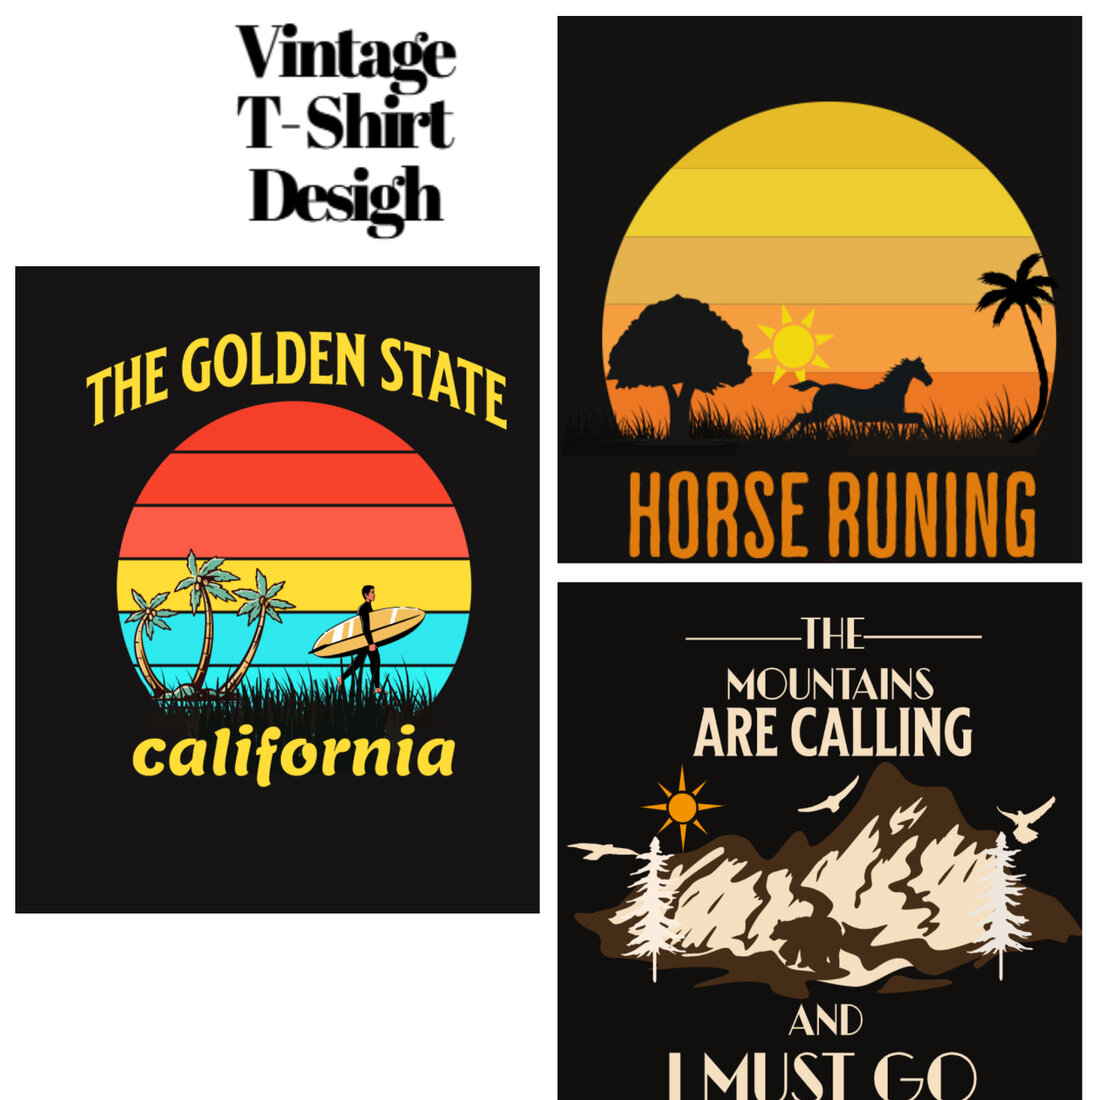 Vintage T- shirt Design SVG Retro Collection cover image.